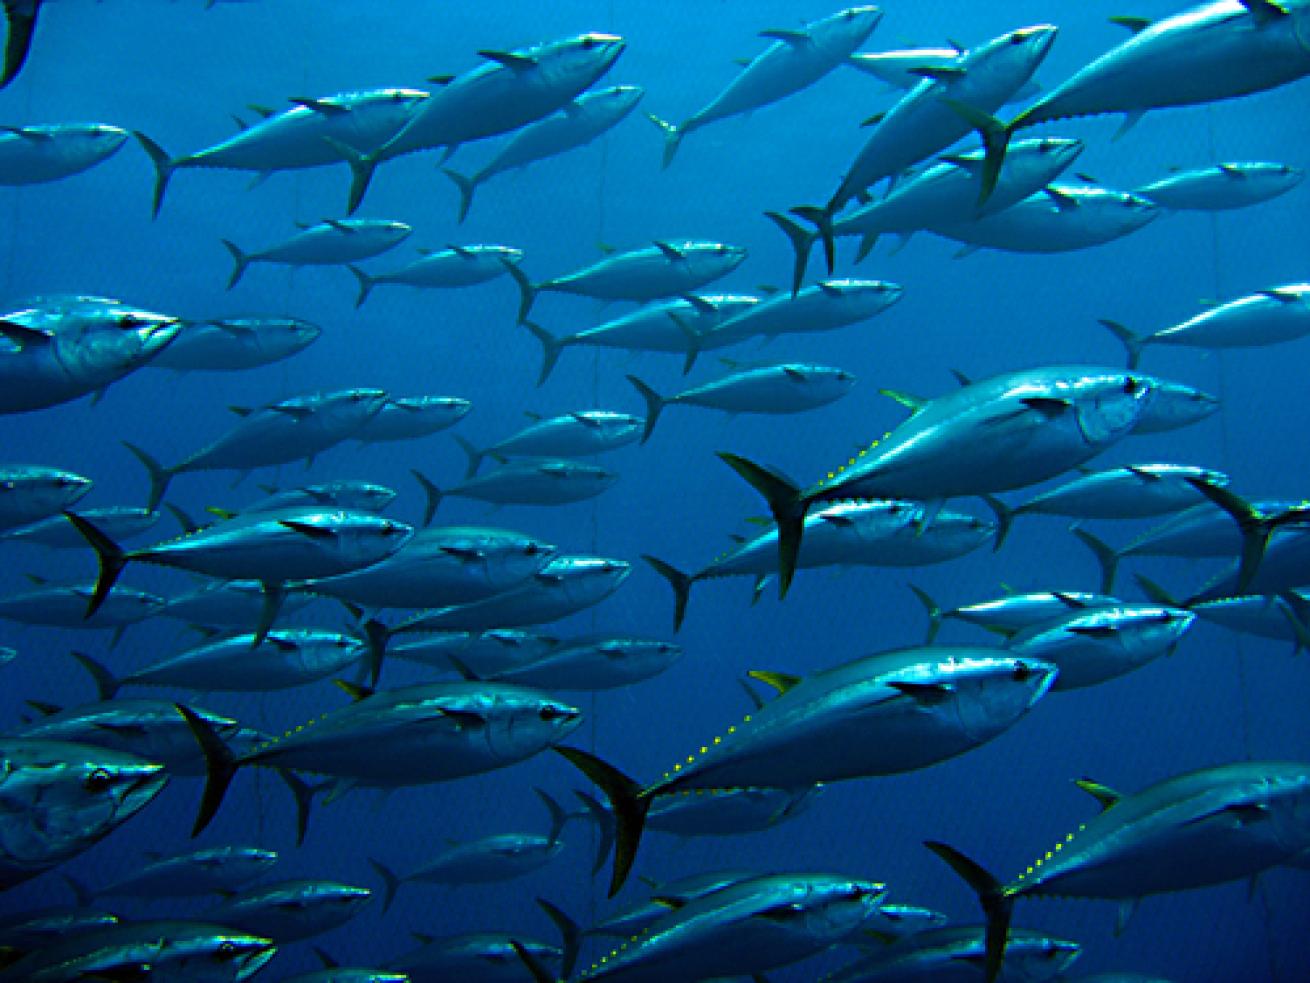 a school of tuna fish in the ocean